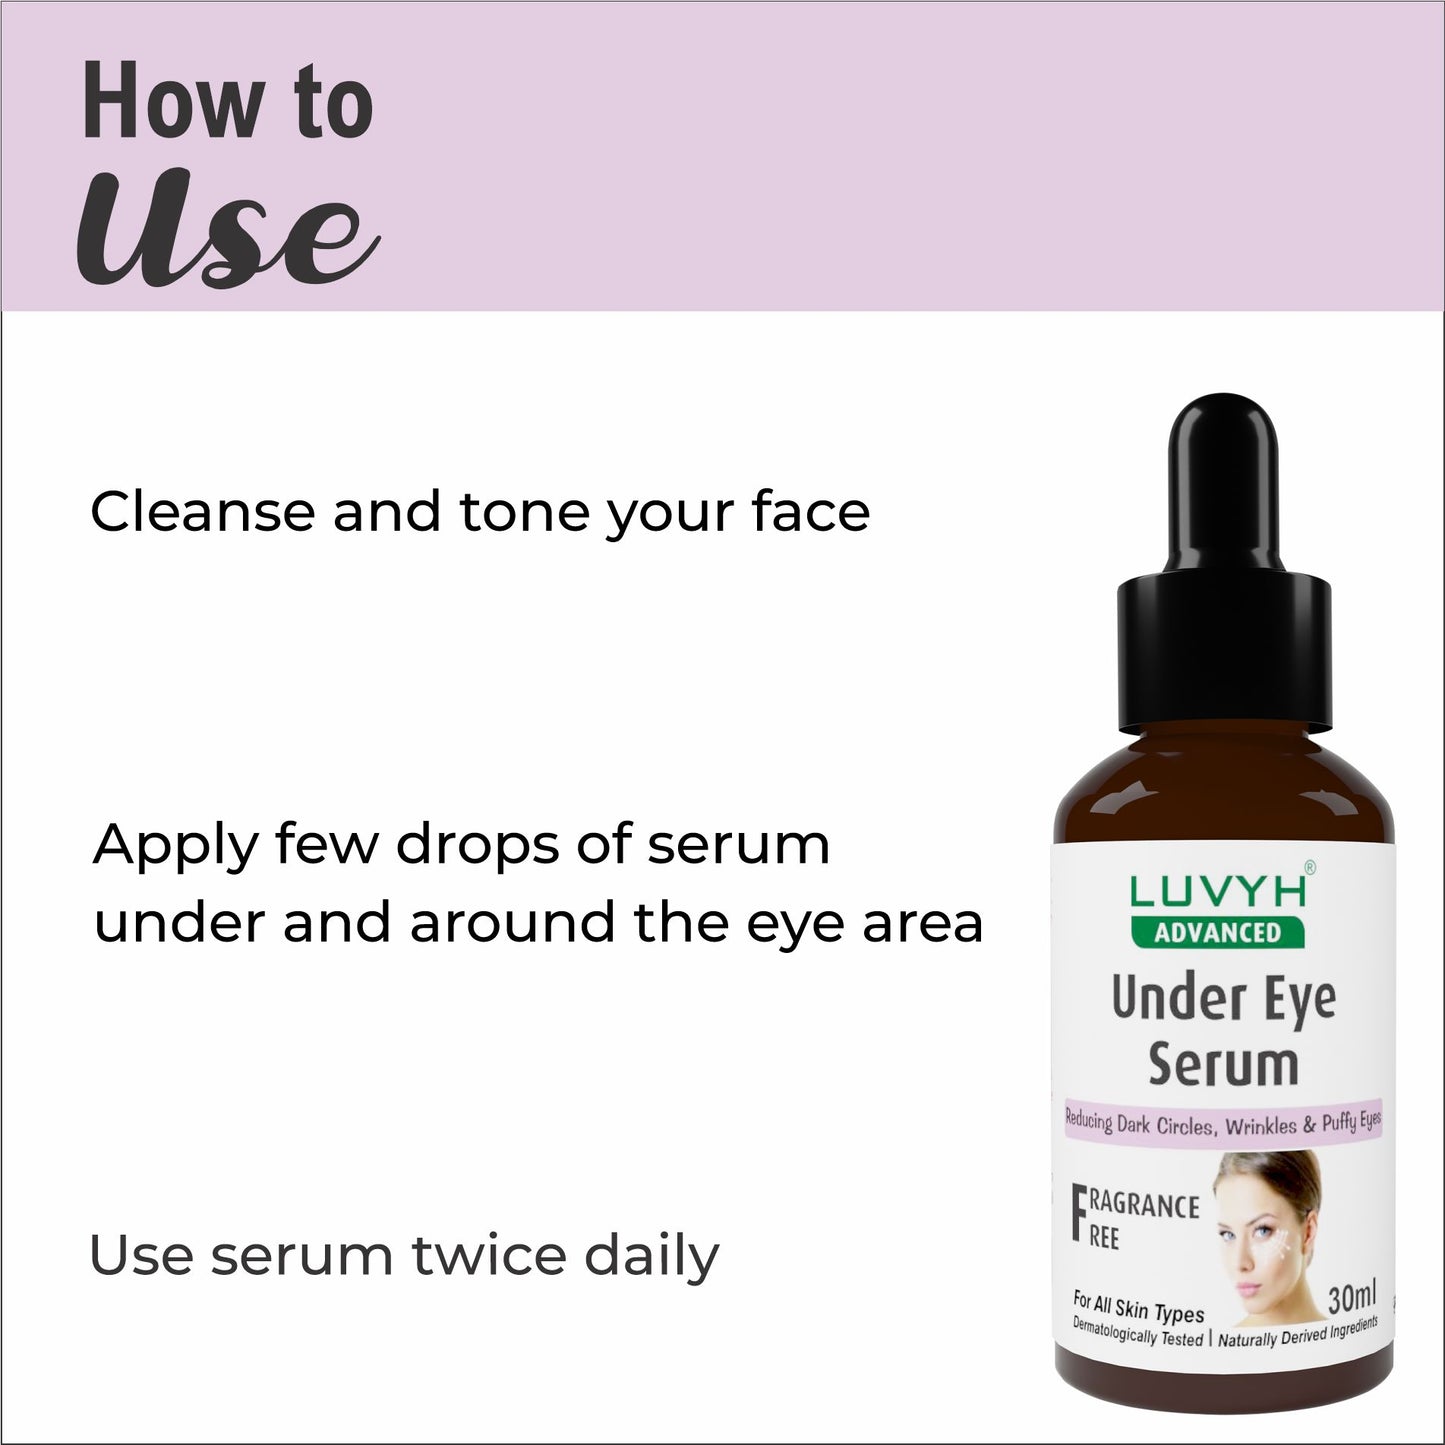 Luvyh Under Eye Serum for Dark Circles, Wrinkles & Puffiness 30ML